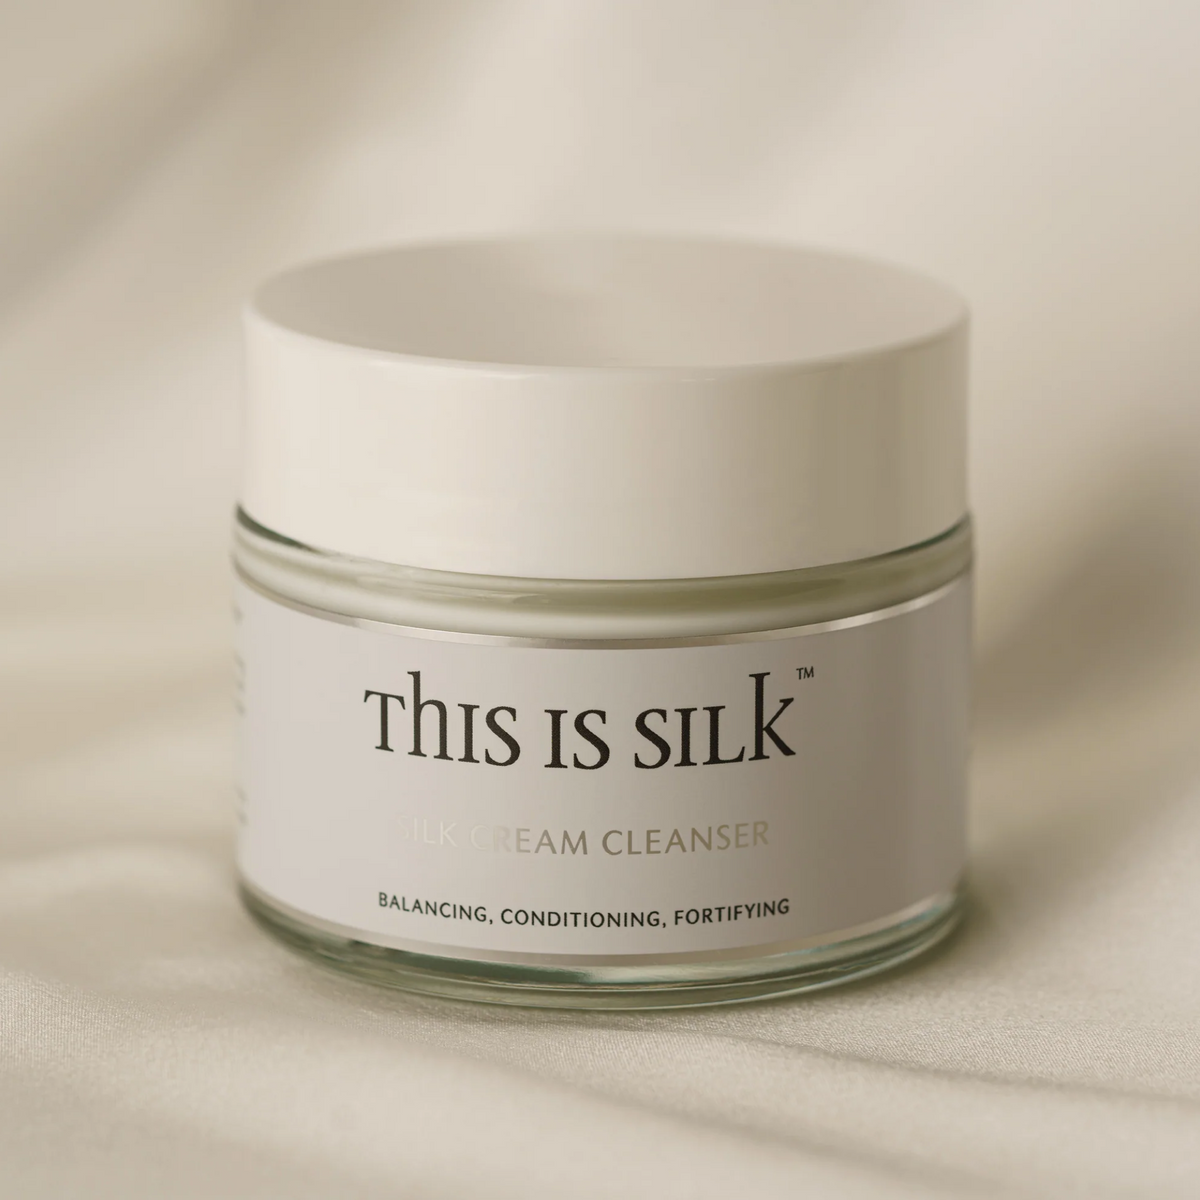 NEW! The Ultimate Silk Skincare Ritual - FREE Silk Pillowcase Included